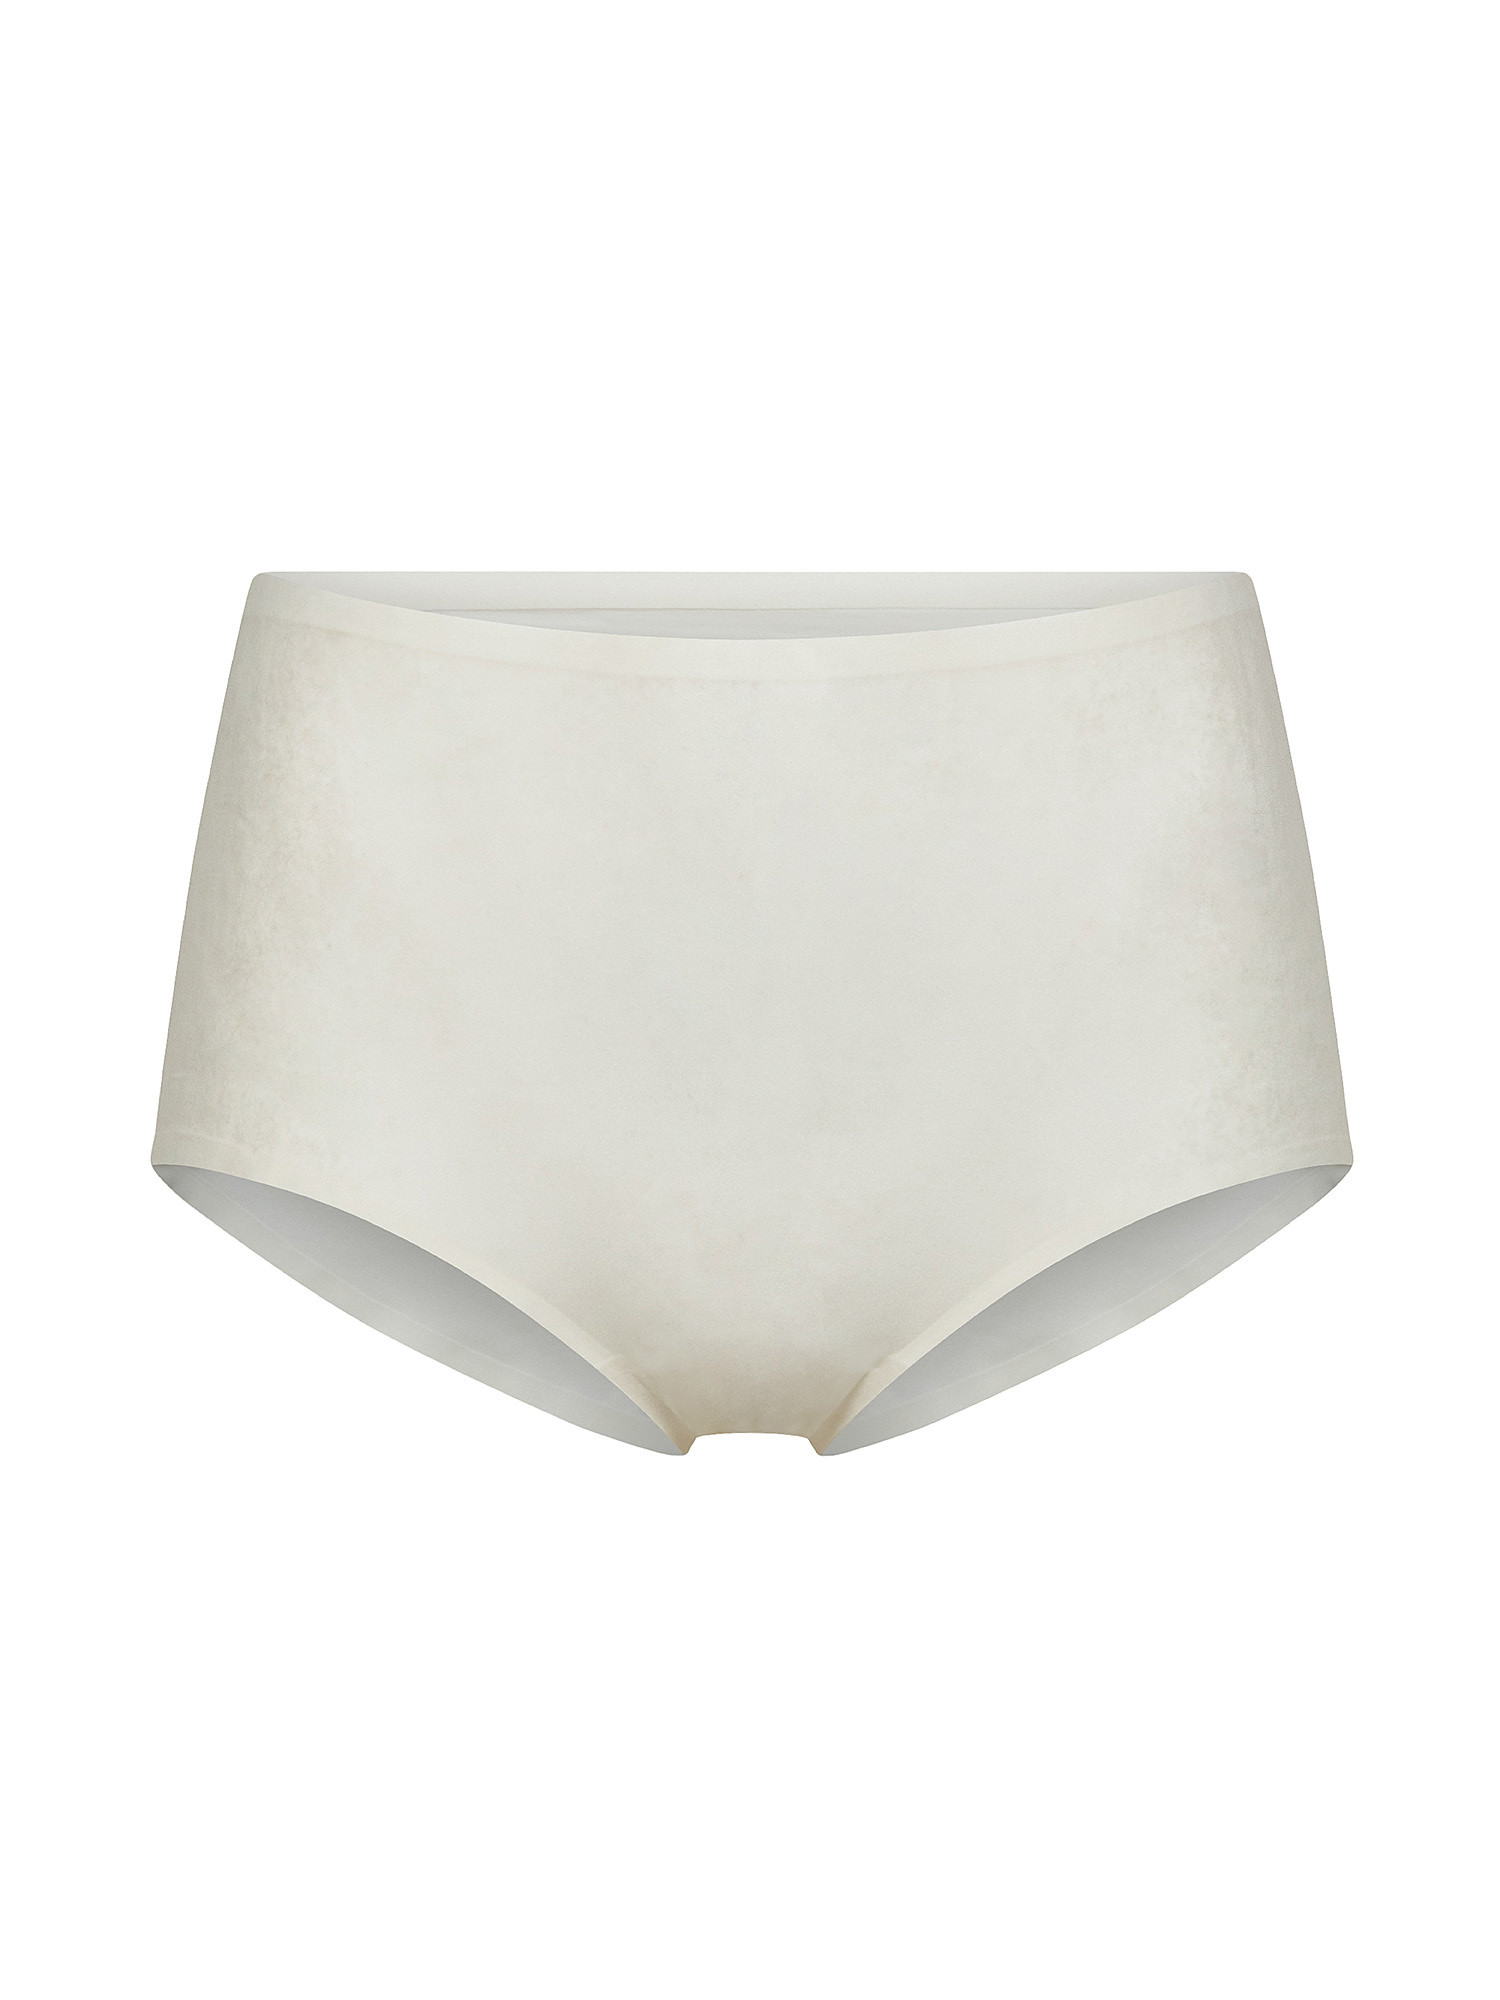 High-waisted culottes, White Ivory, large image number 0